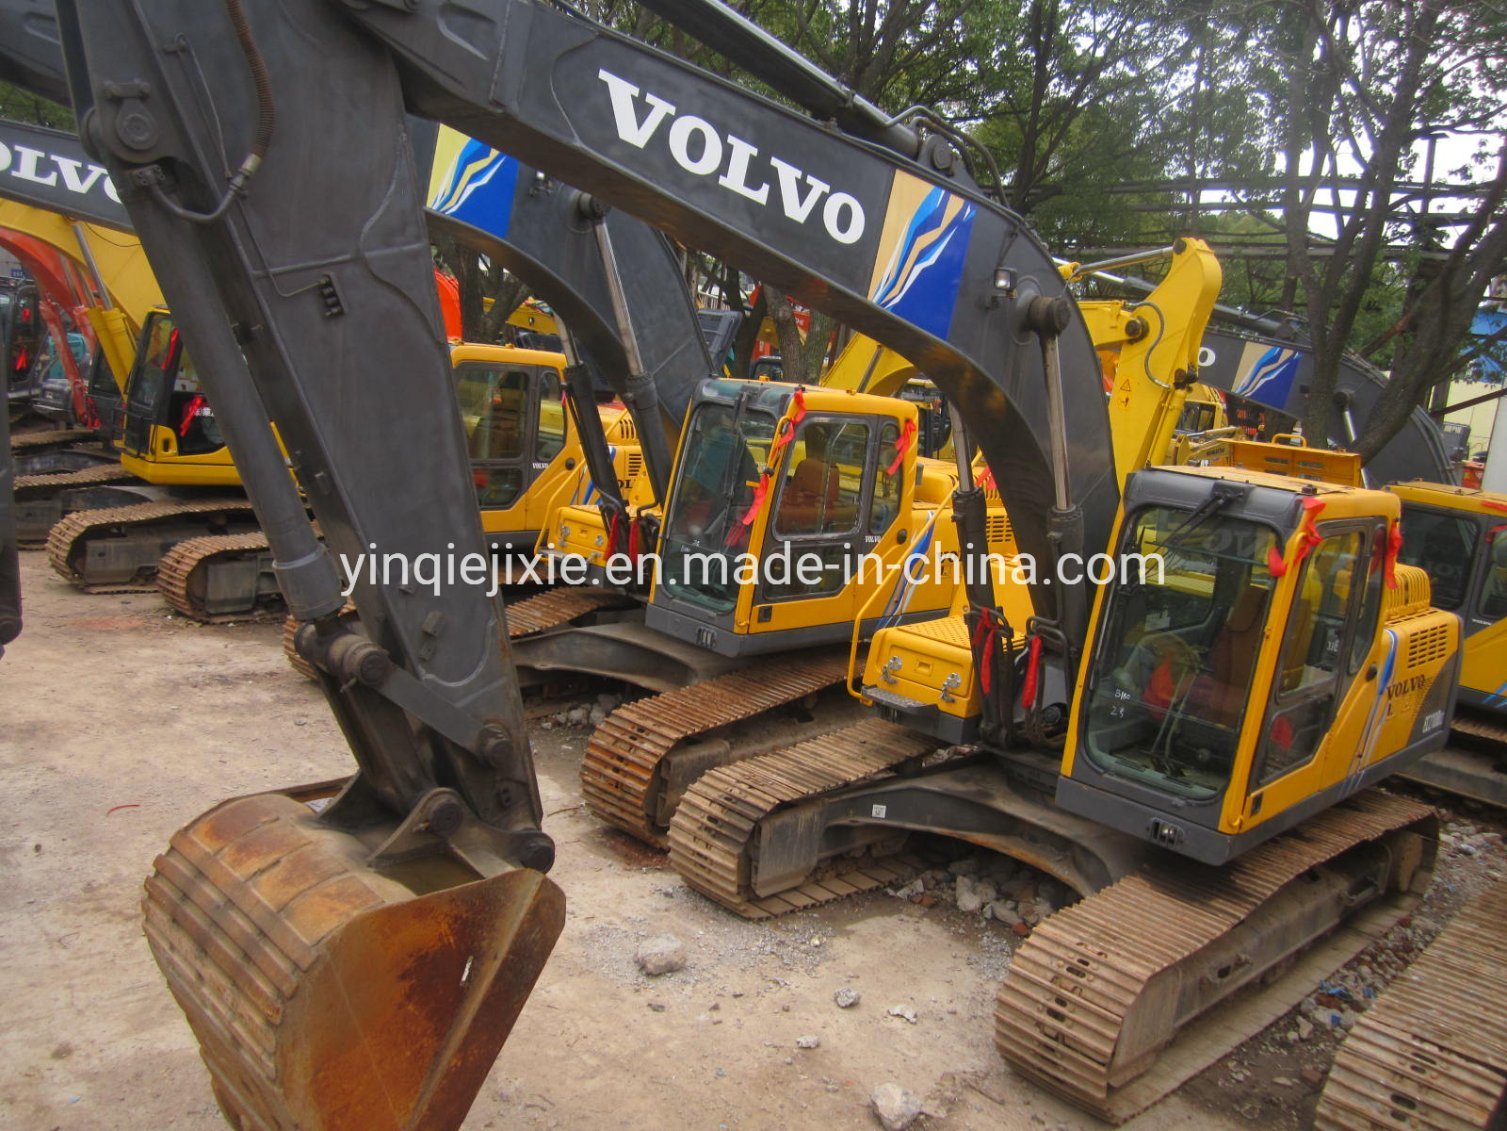 Hydraulic Excavators Volvo 240 Used Volvo 20t Excavator Volvo Ec240blc Crawler Excavator for Sale